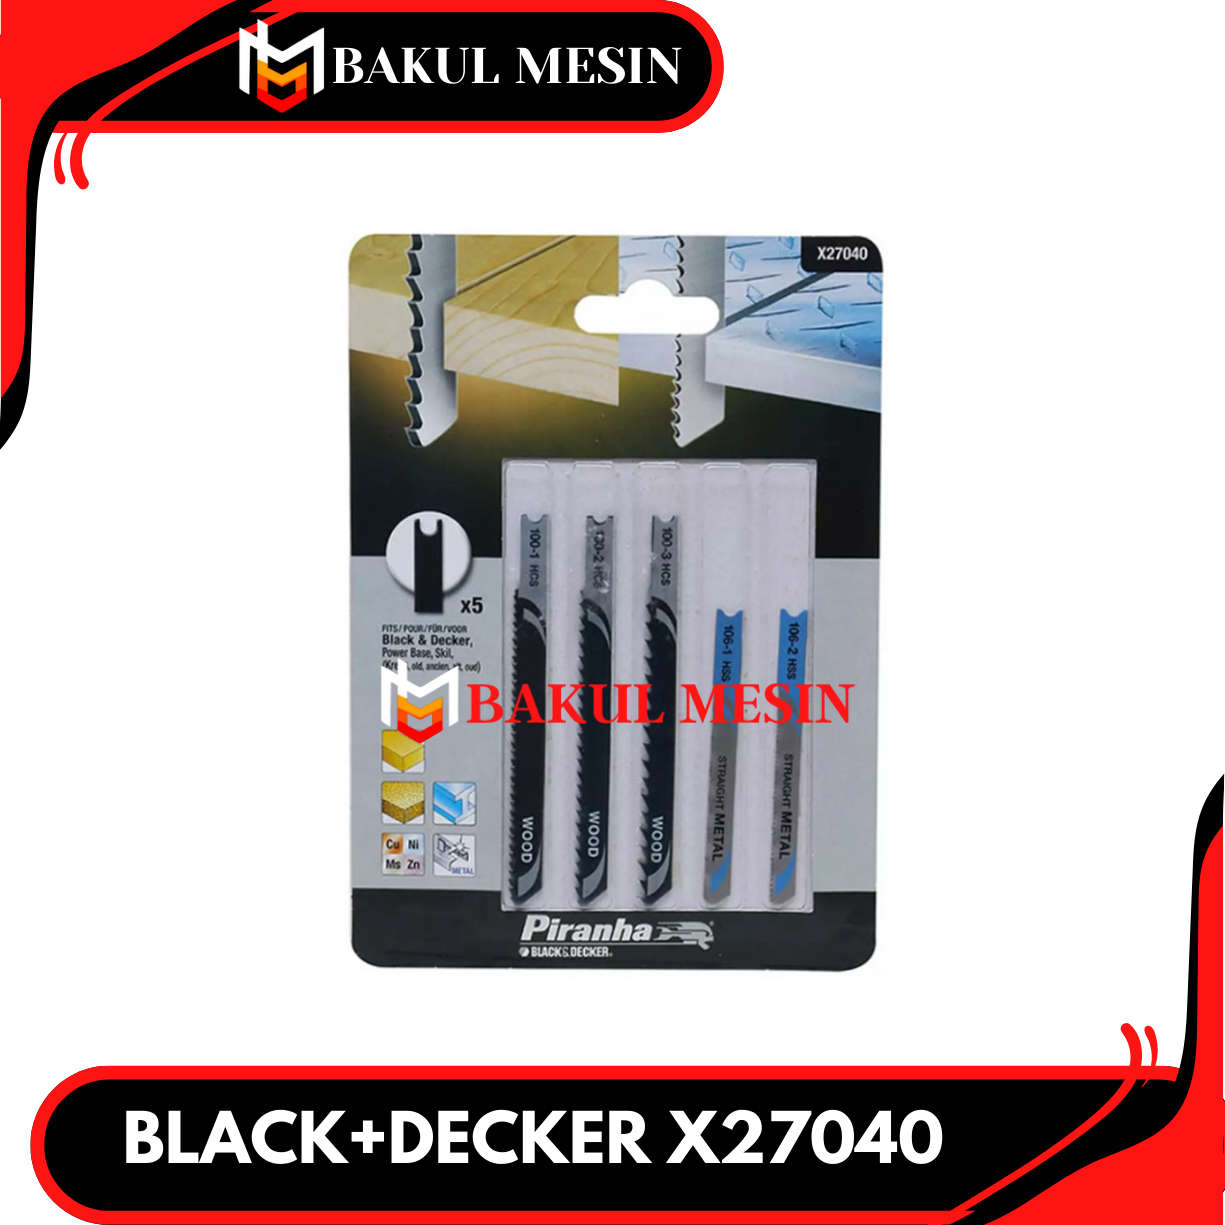 Black & Decker X27040 Jigsaw Blades Set (Piranha)